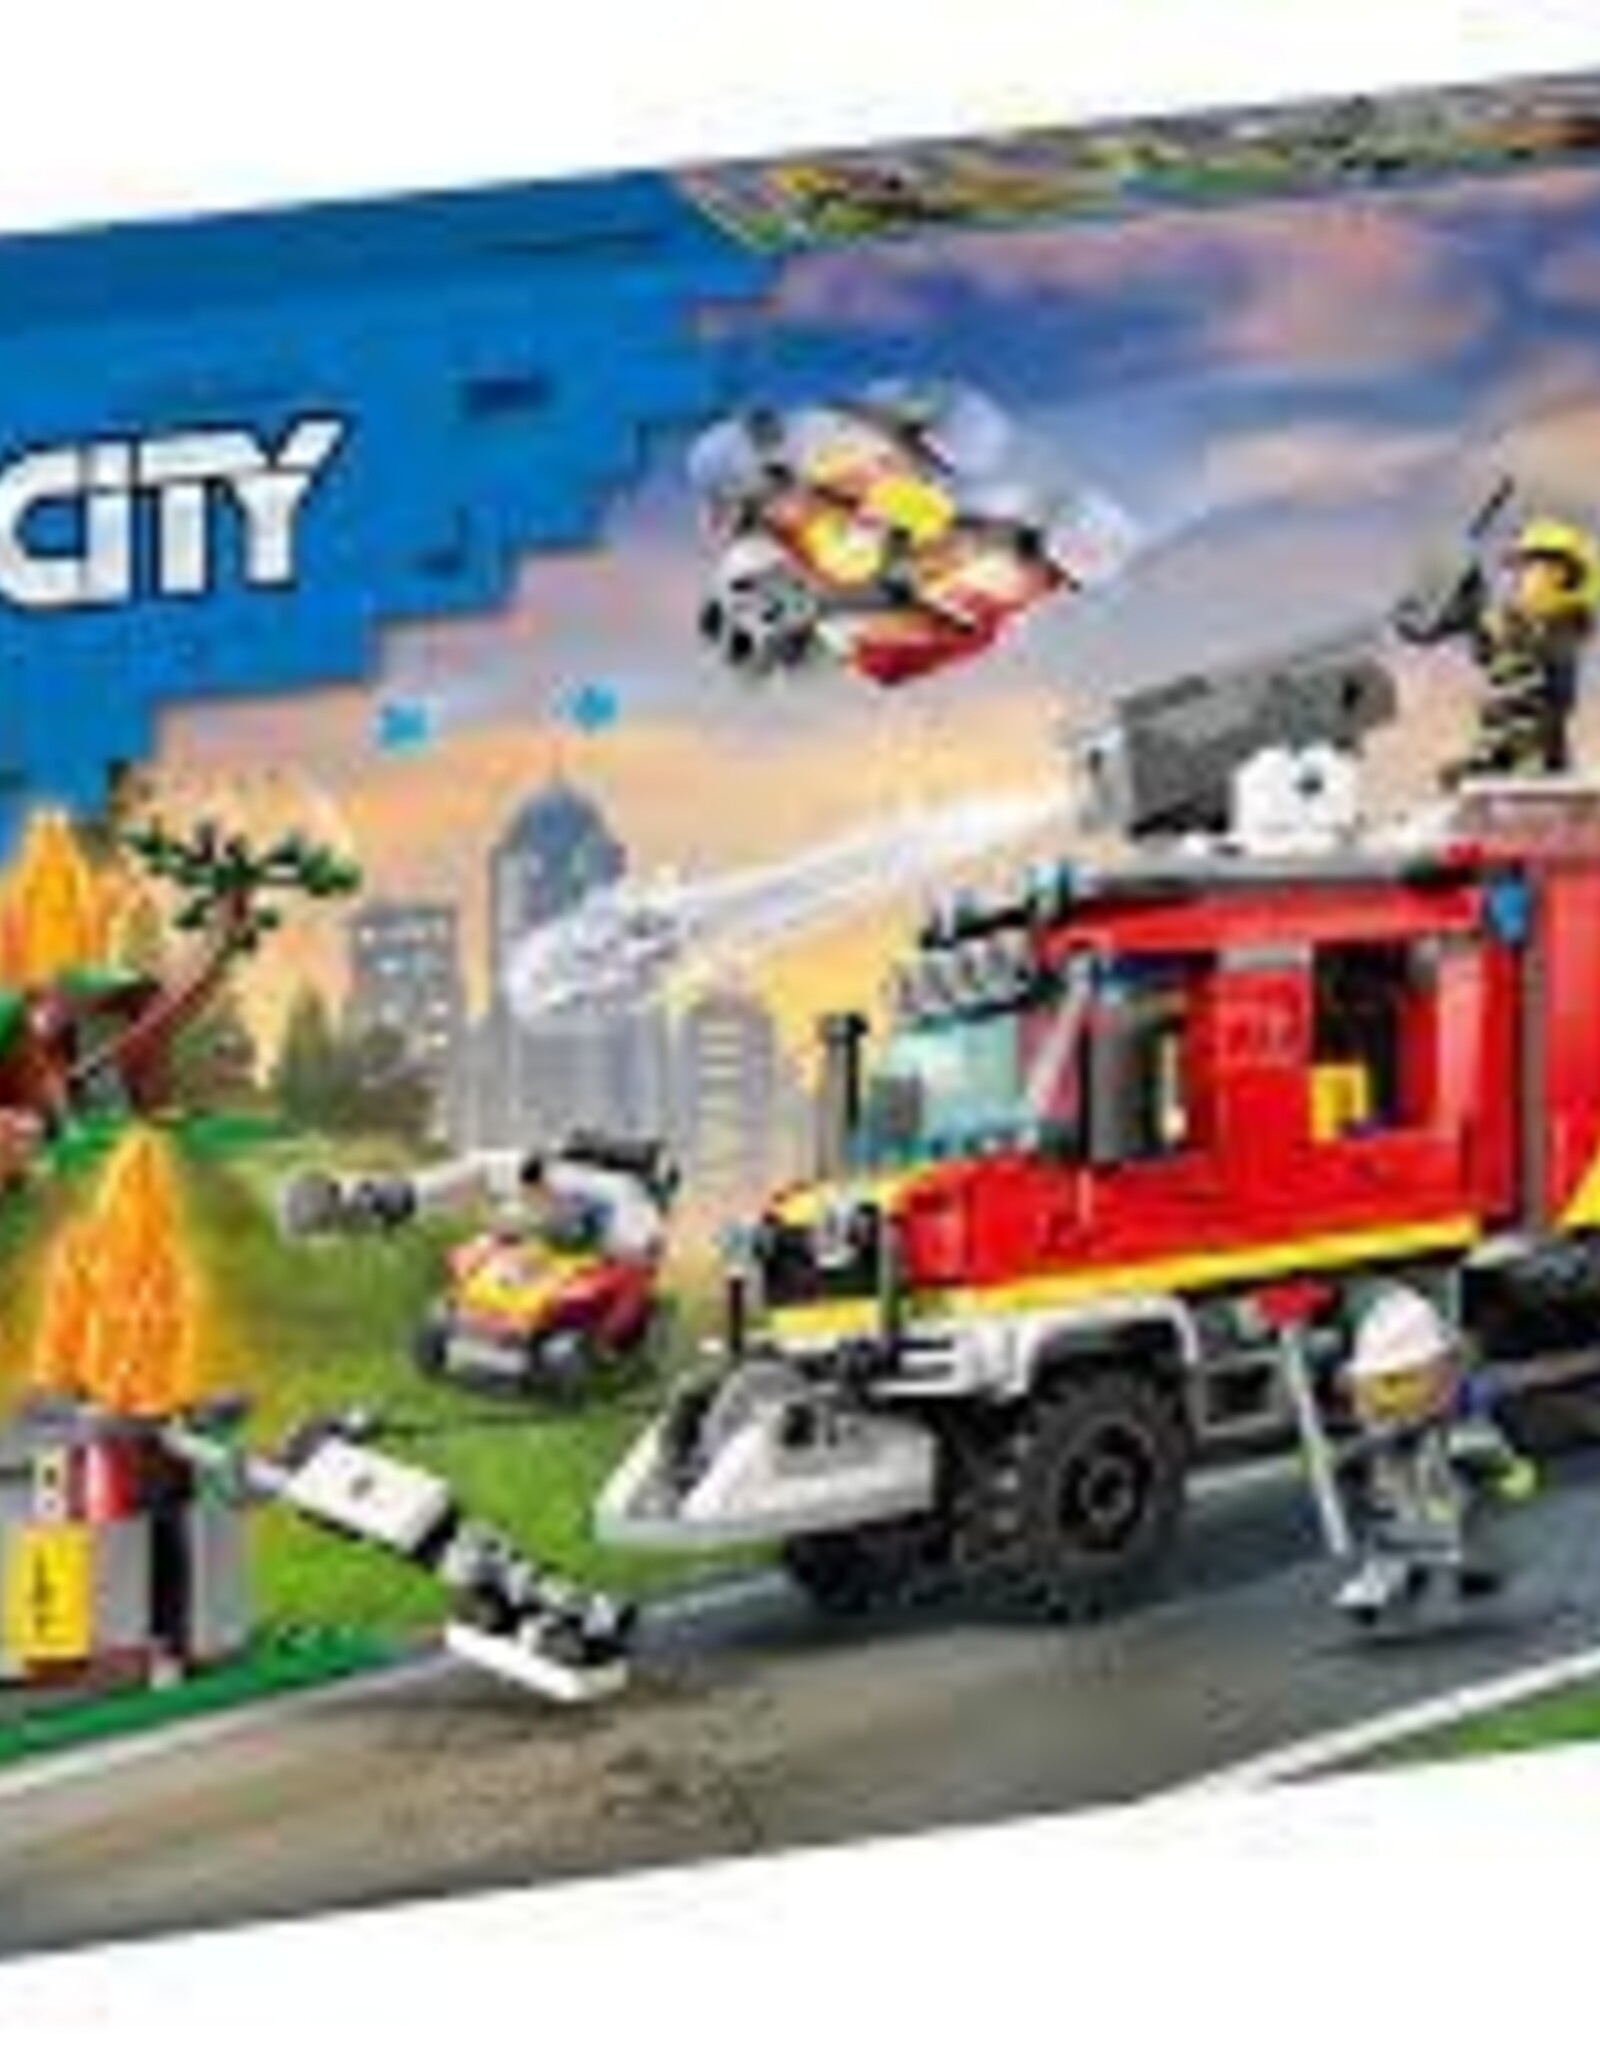 Lego Fire Command Truck